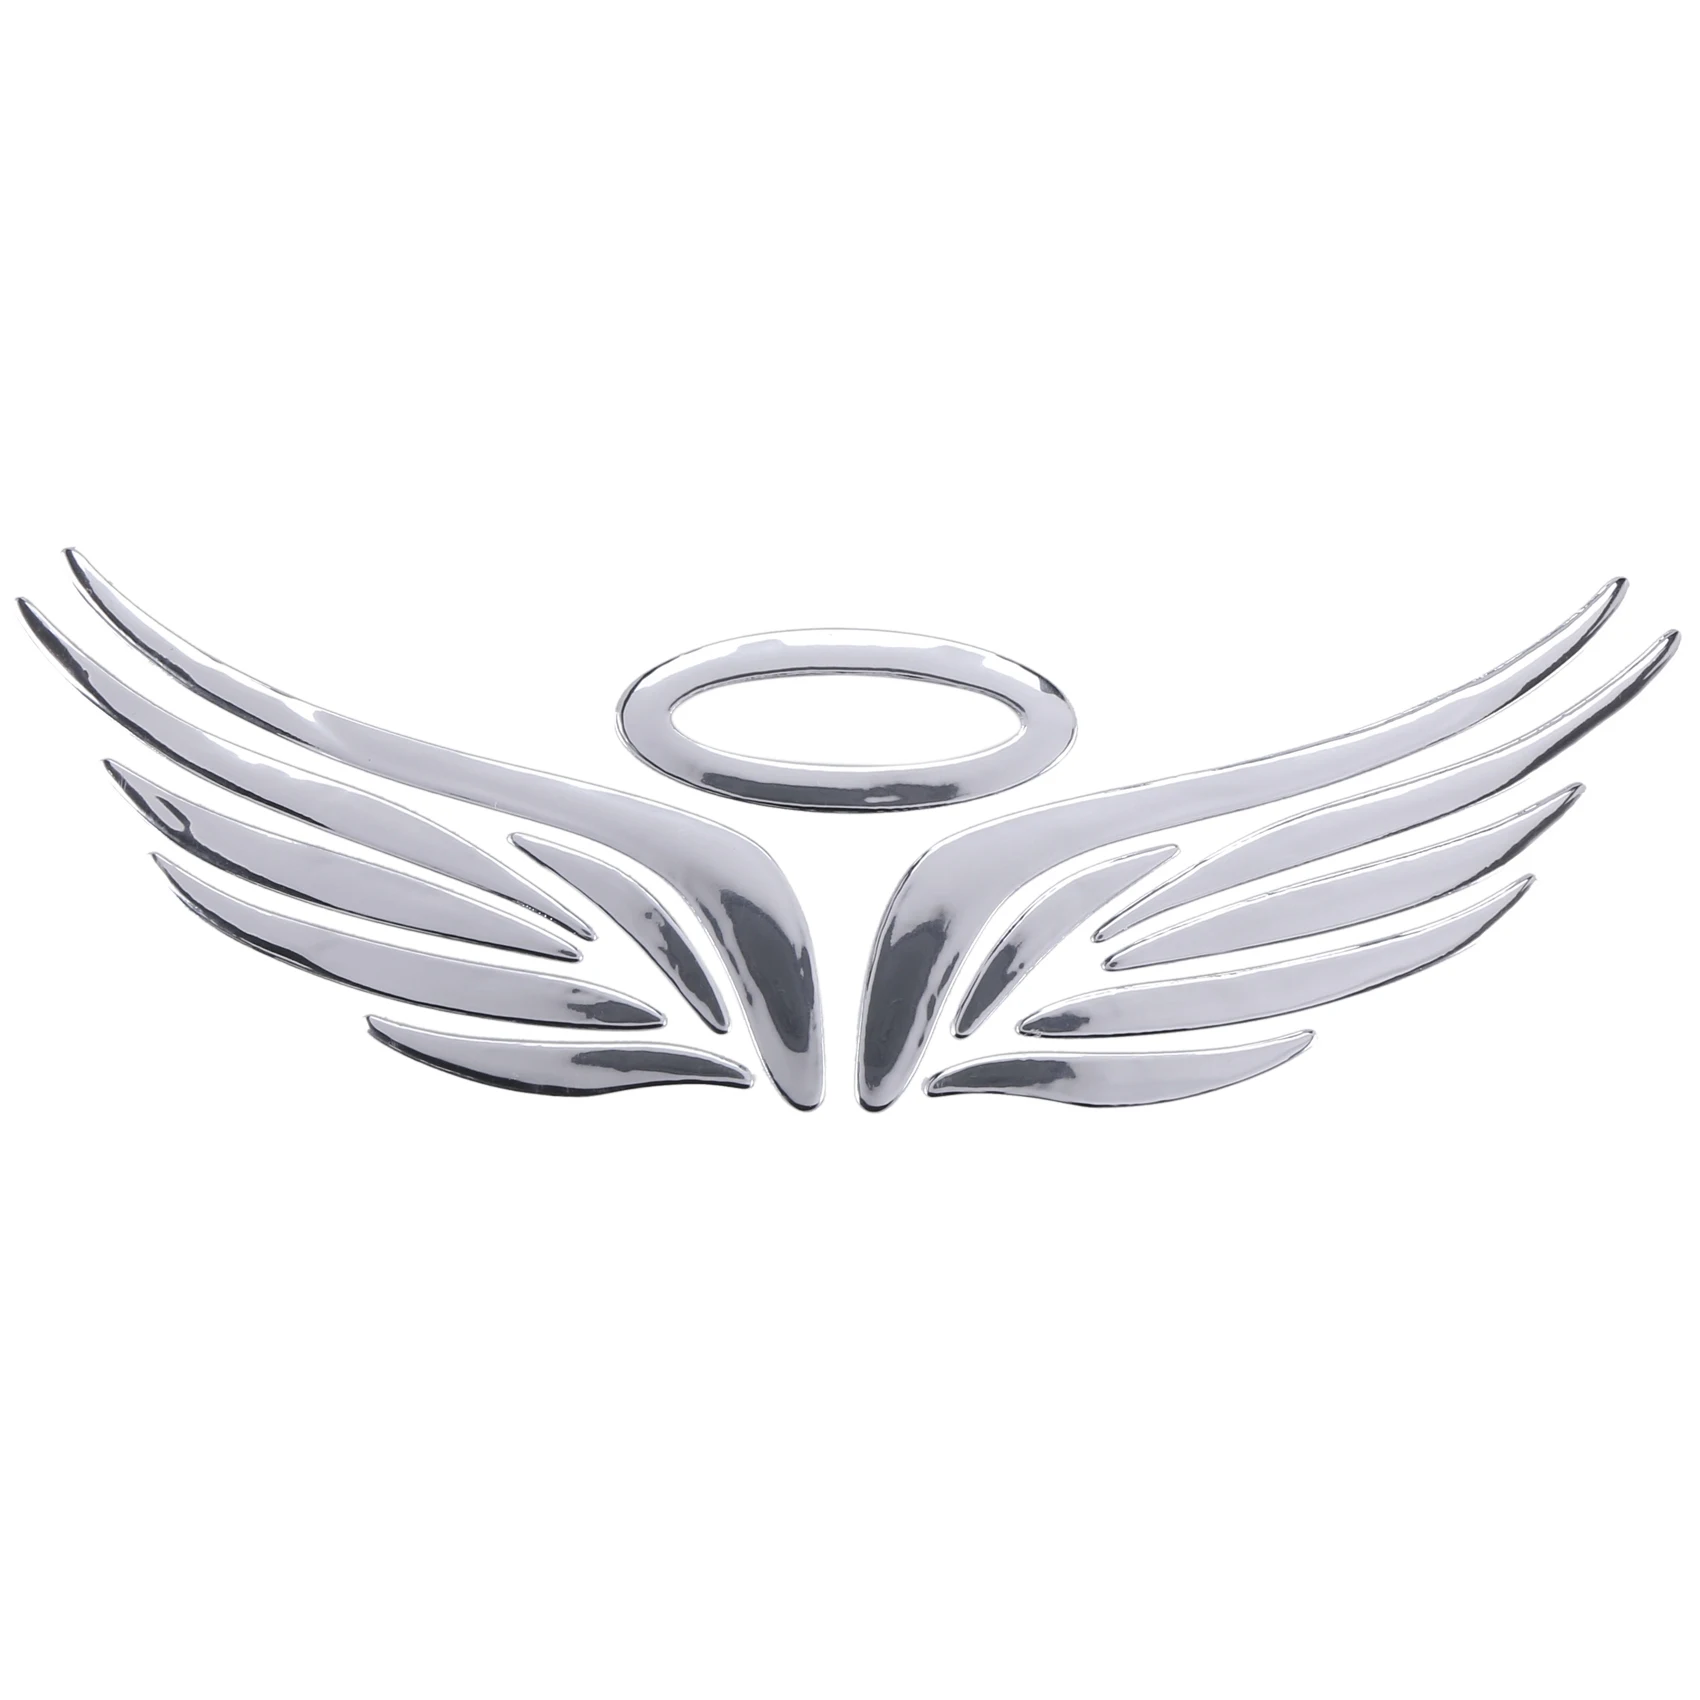 

3D Chrome Angel Wing Sticker Decal Auto Car Emblem Decal Decoration Color Silver